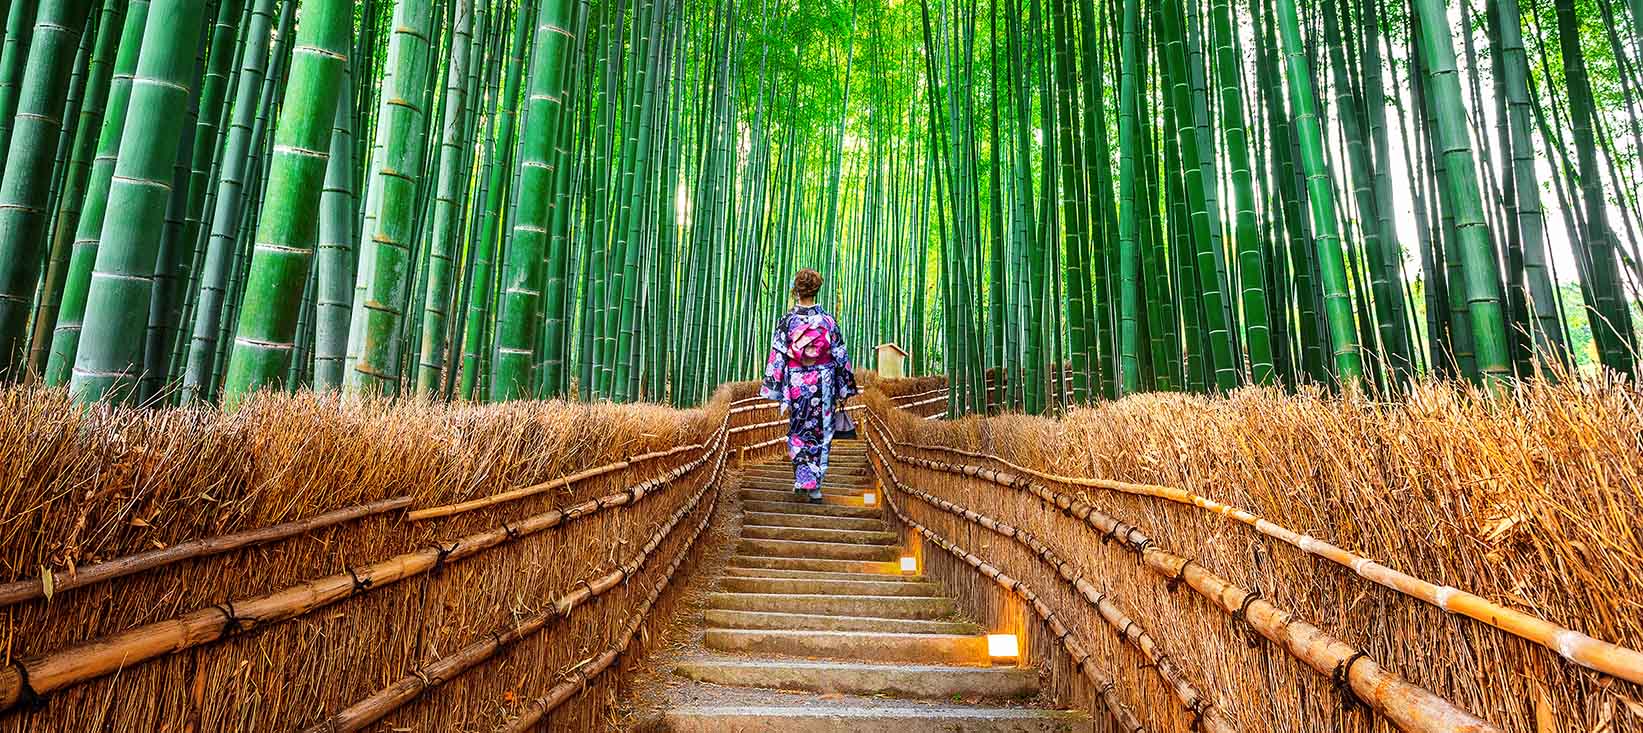 Besg en fantastisk bambusskov nr Kyoto i Japan